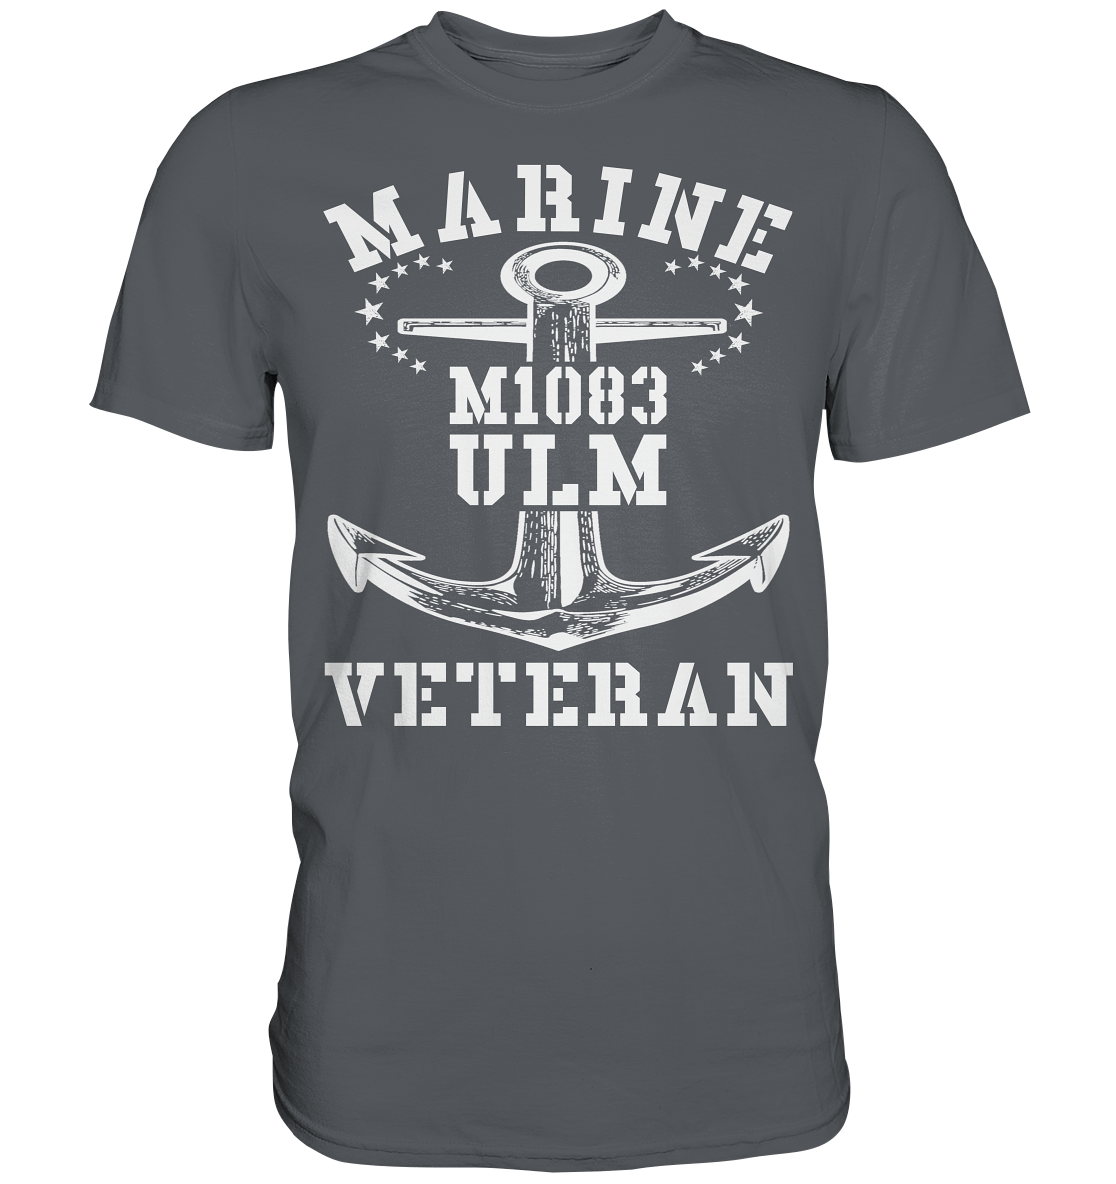 MARINE VETERAN M1083 ULM - Premium Shirt